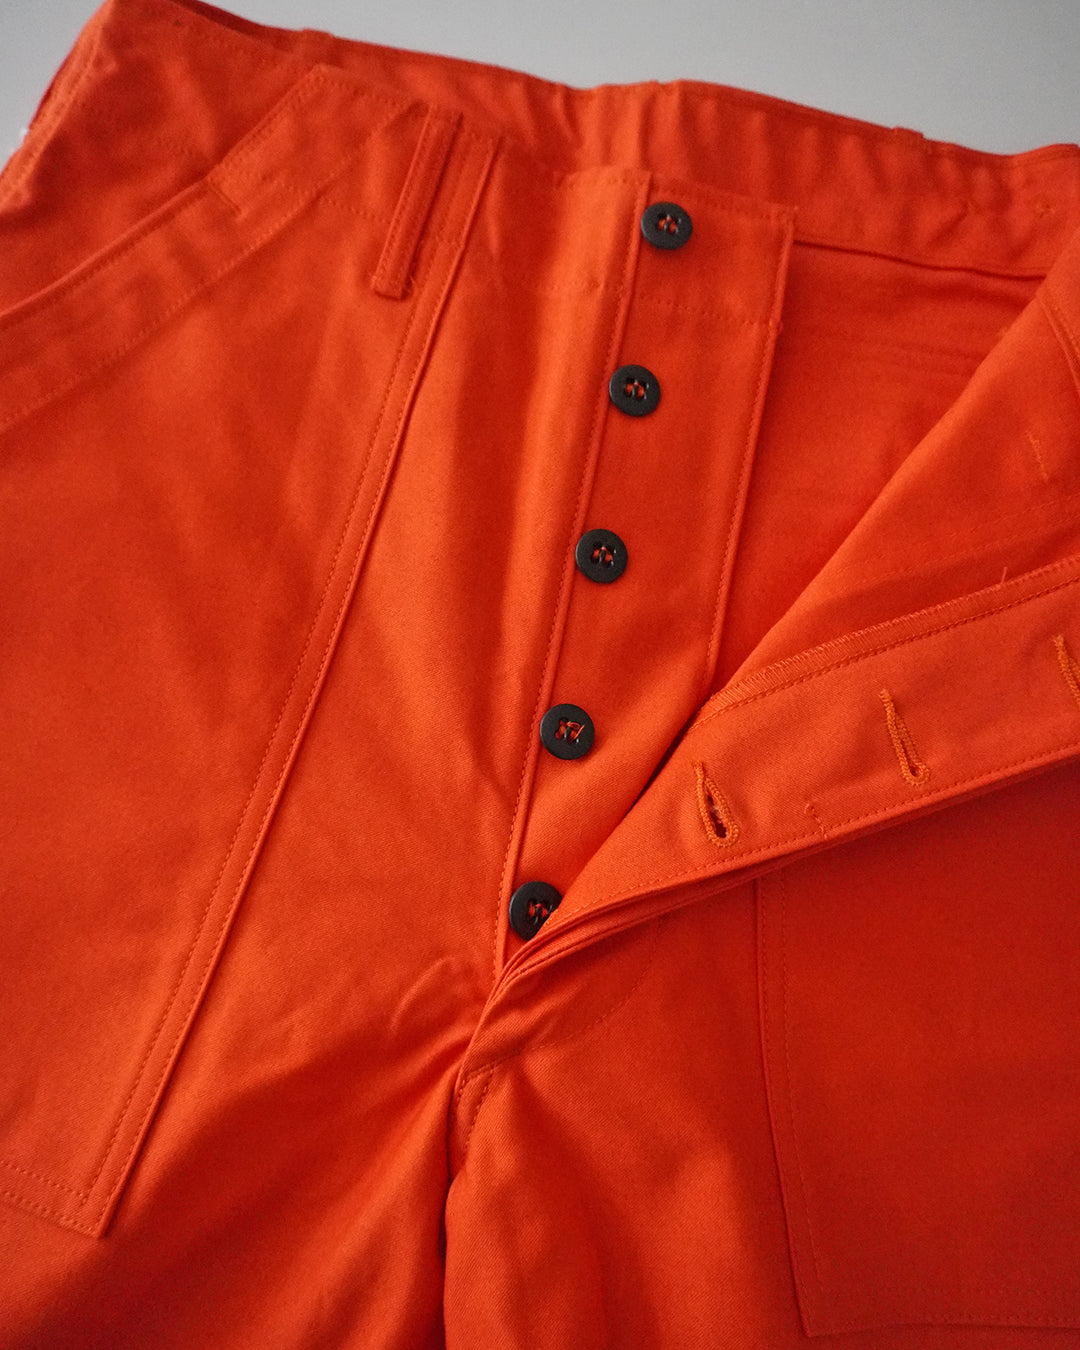 TUKI baker pants / orange / 2 ply sateen